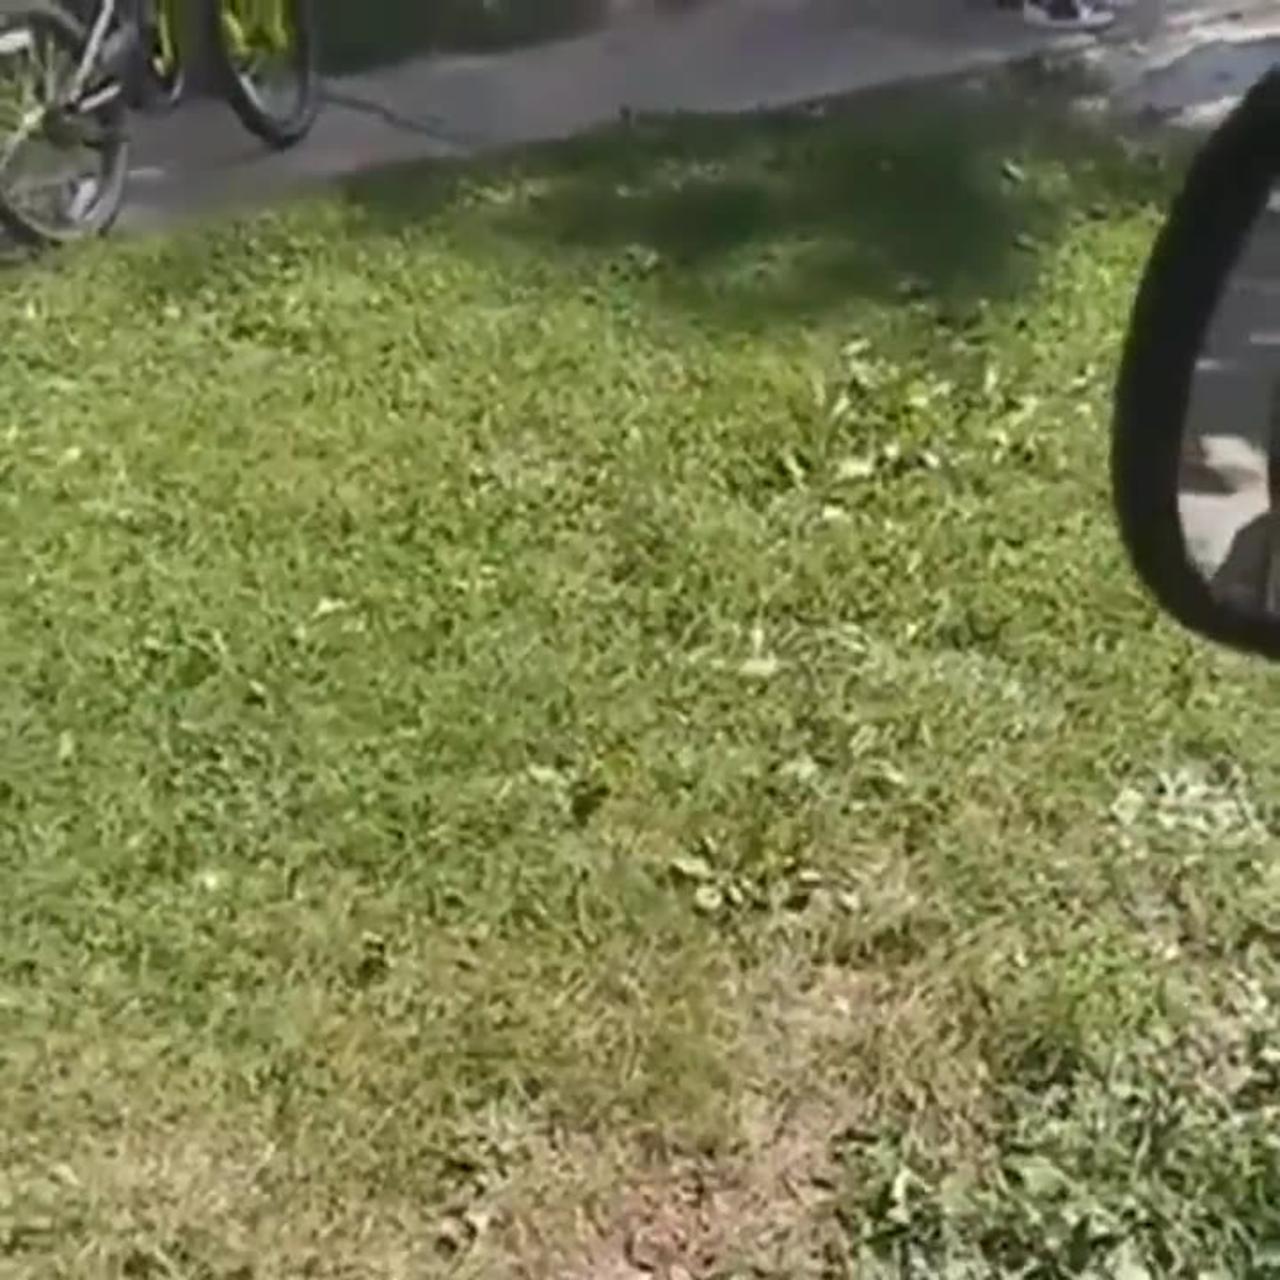 Ohio Man Livestreams Own Death on Facebook Live Due to Speeding